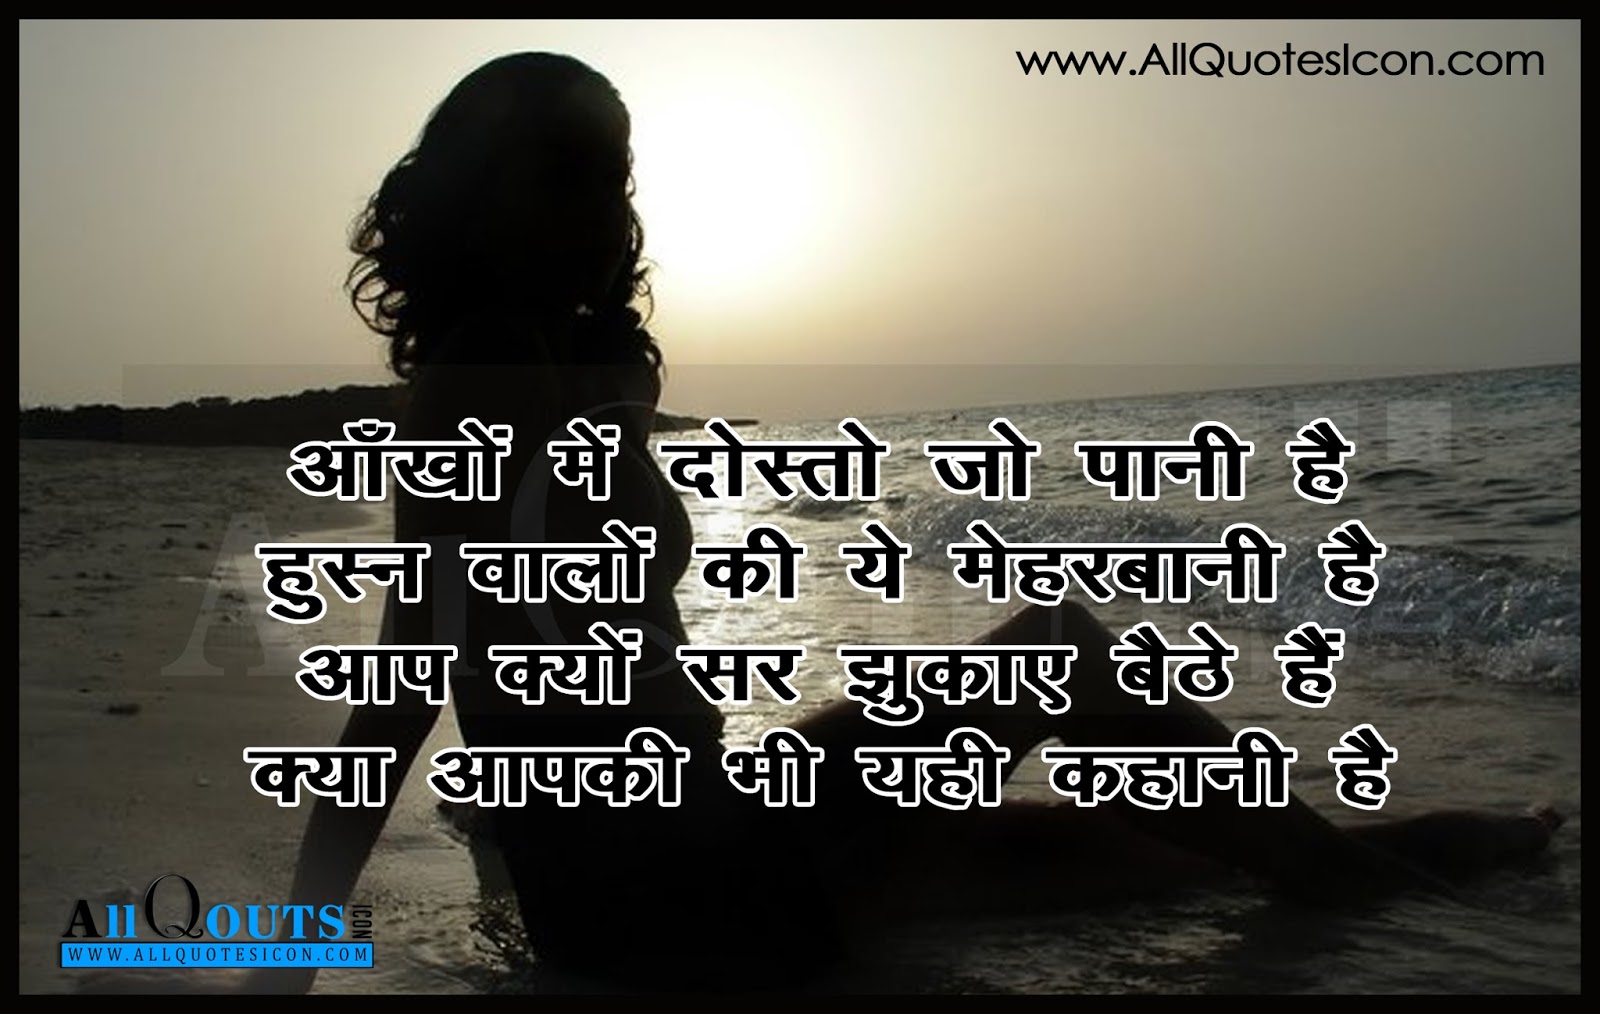 Inspirational Quote Hindi